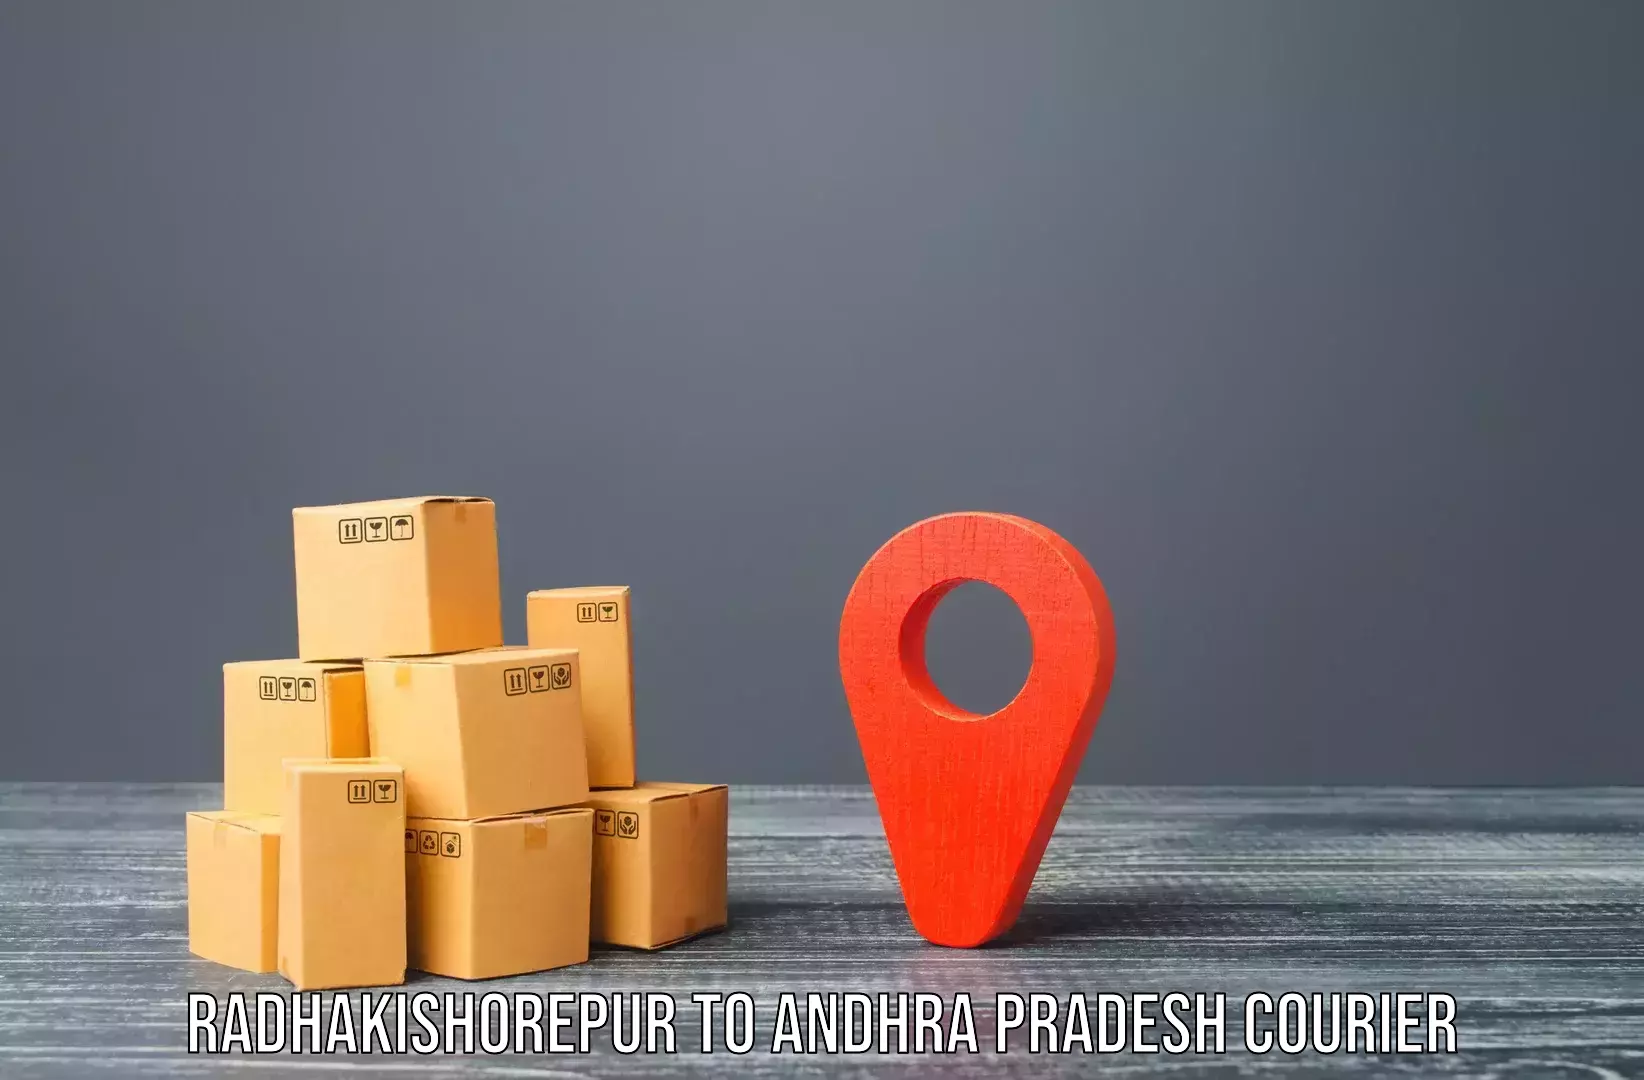 Efficient moving company Radhakishorepur to East Godavari